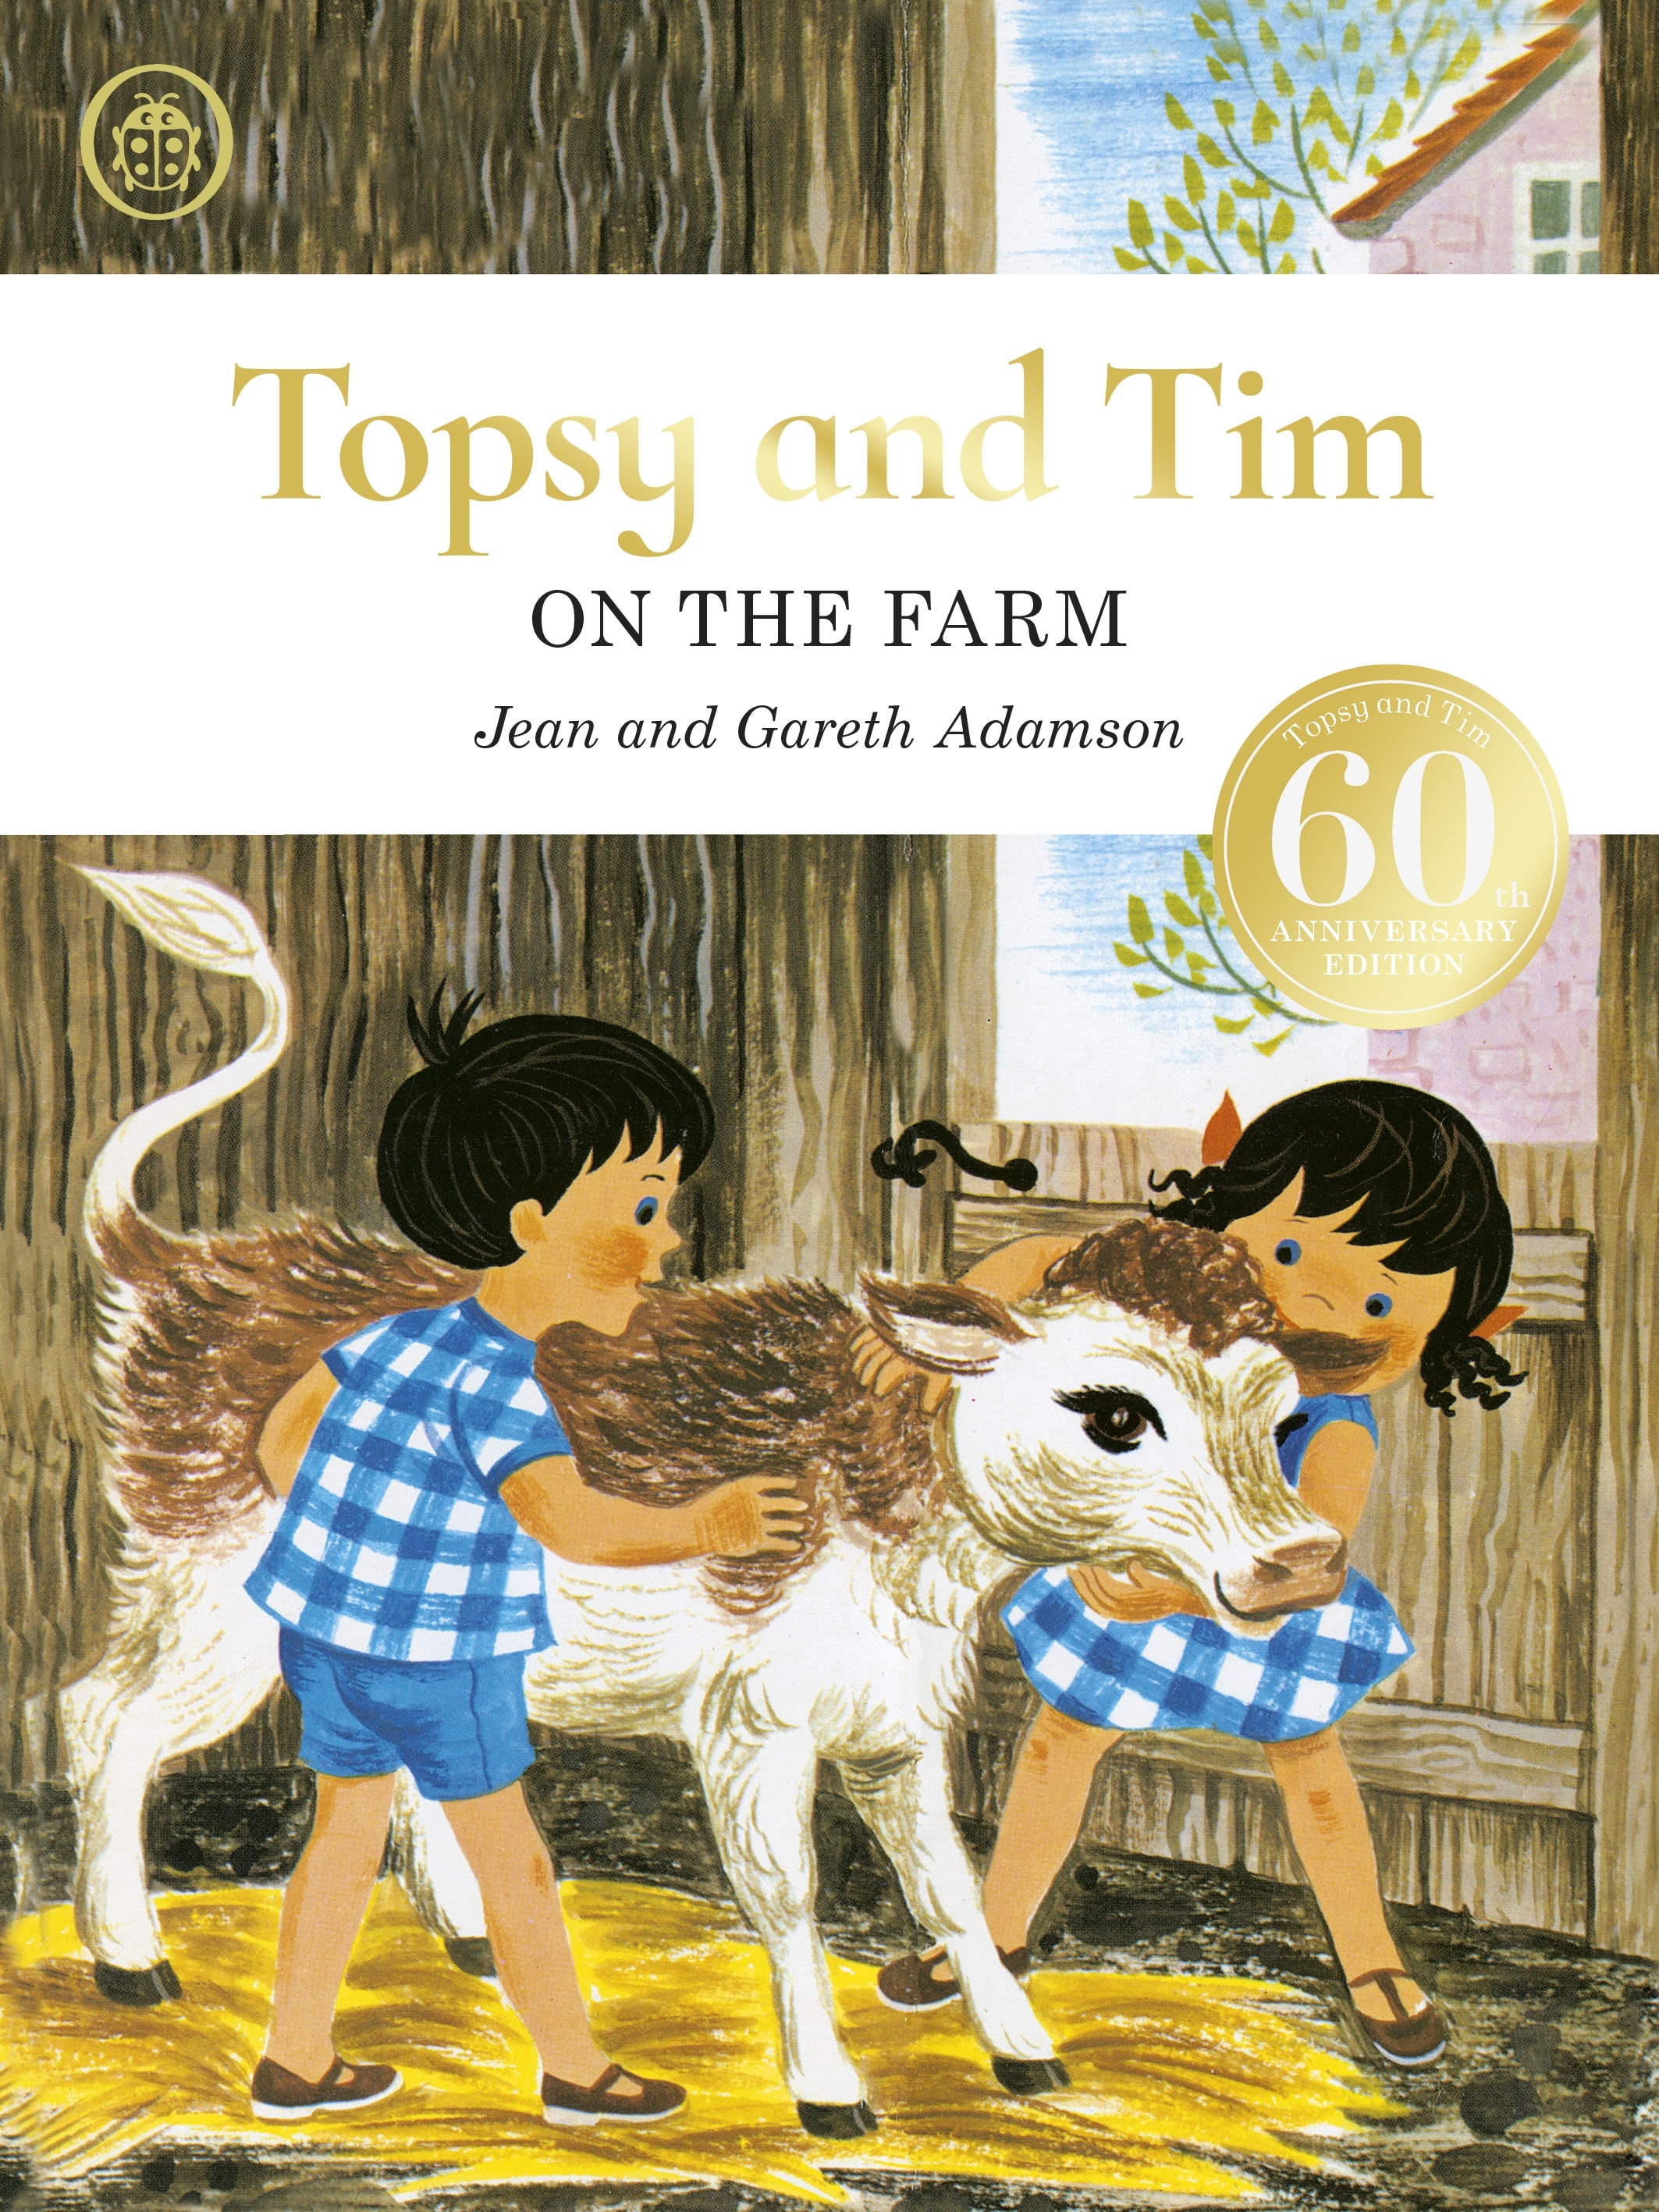 Book “Topsy and Tim: On the Farm anniversary edition” by Jean Adamson, Gareth Adamson — February 27, 2020